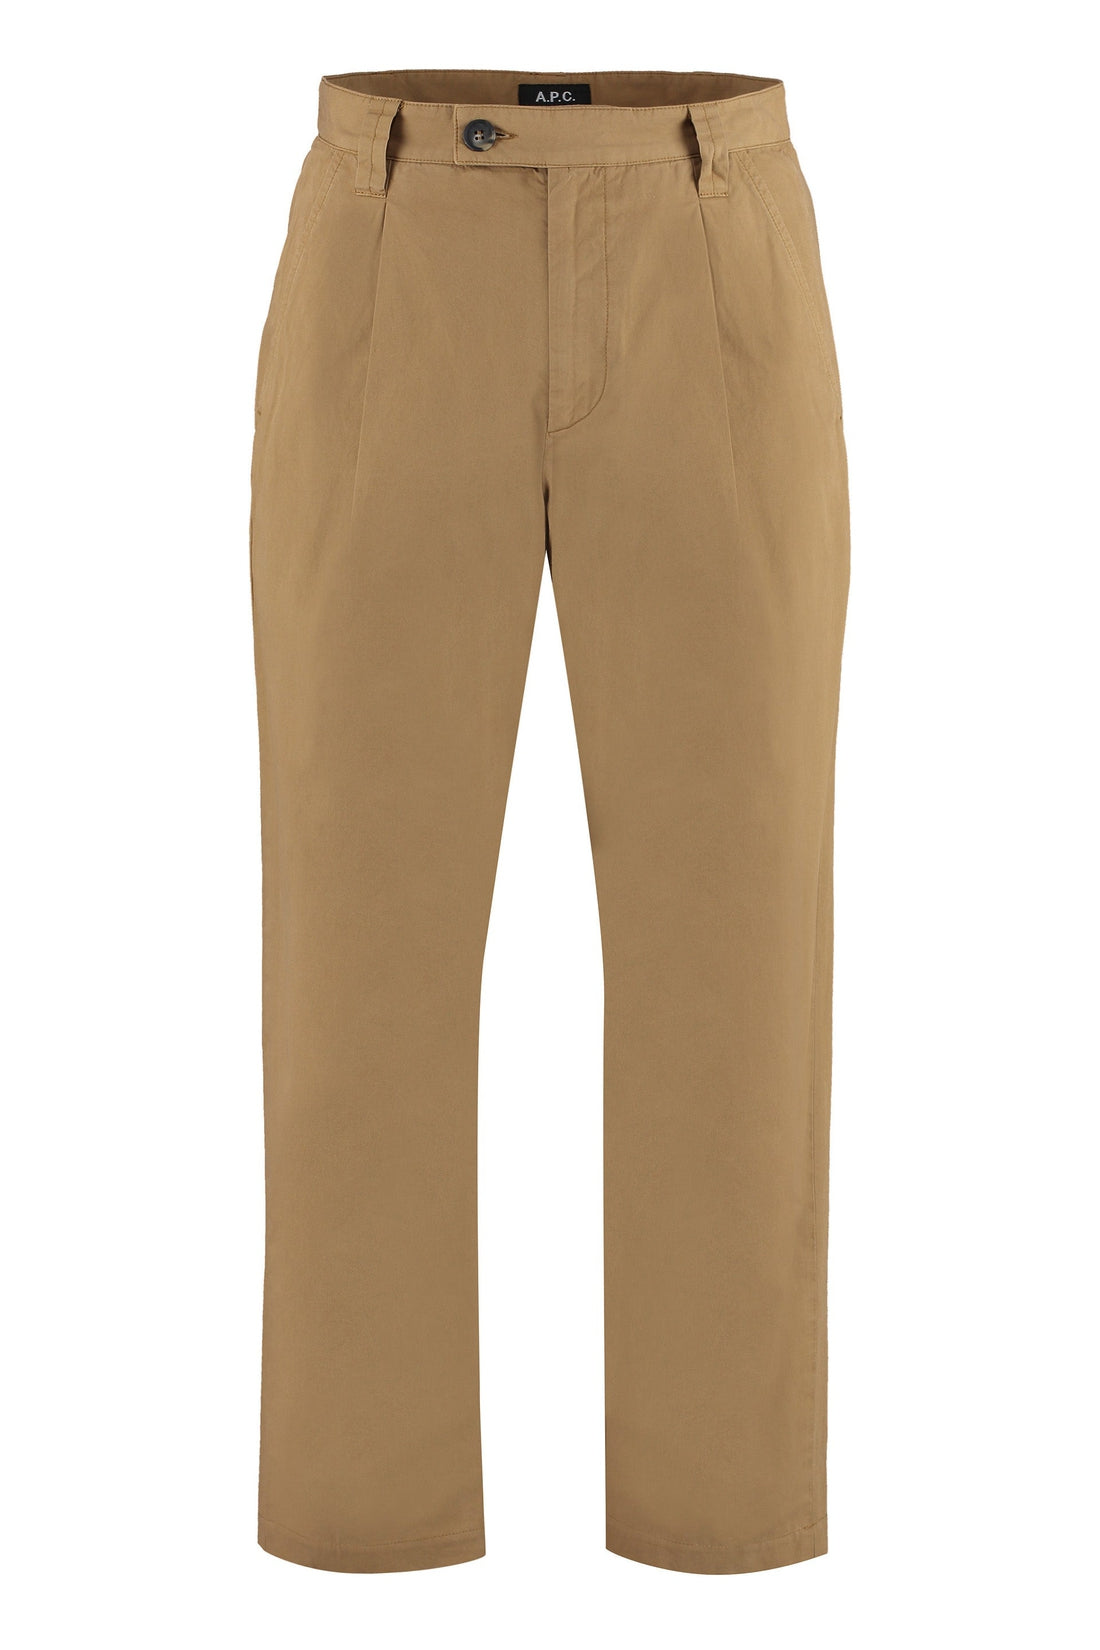 A.P.C.-OUTLET-SALE-Cotton Chino trousers-ARCHIVIST